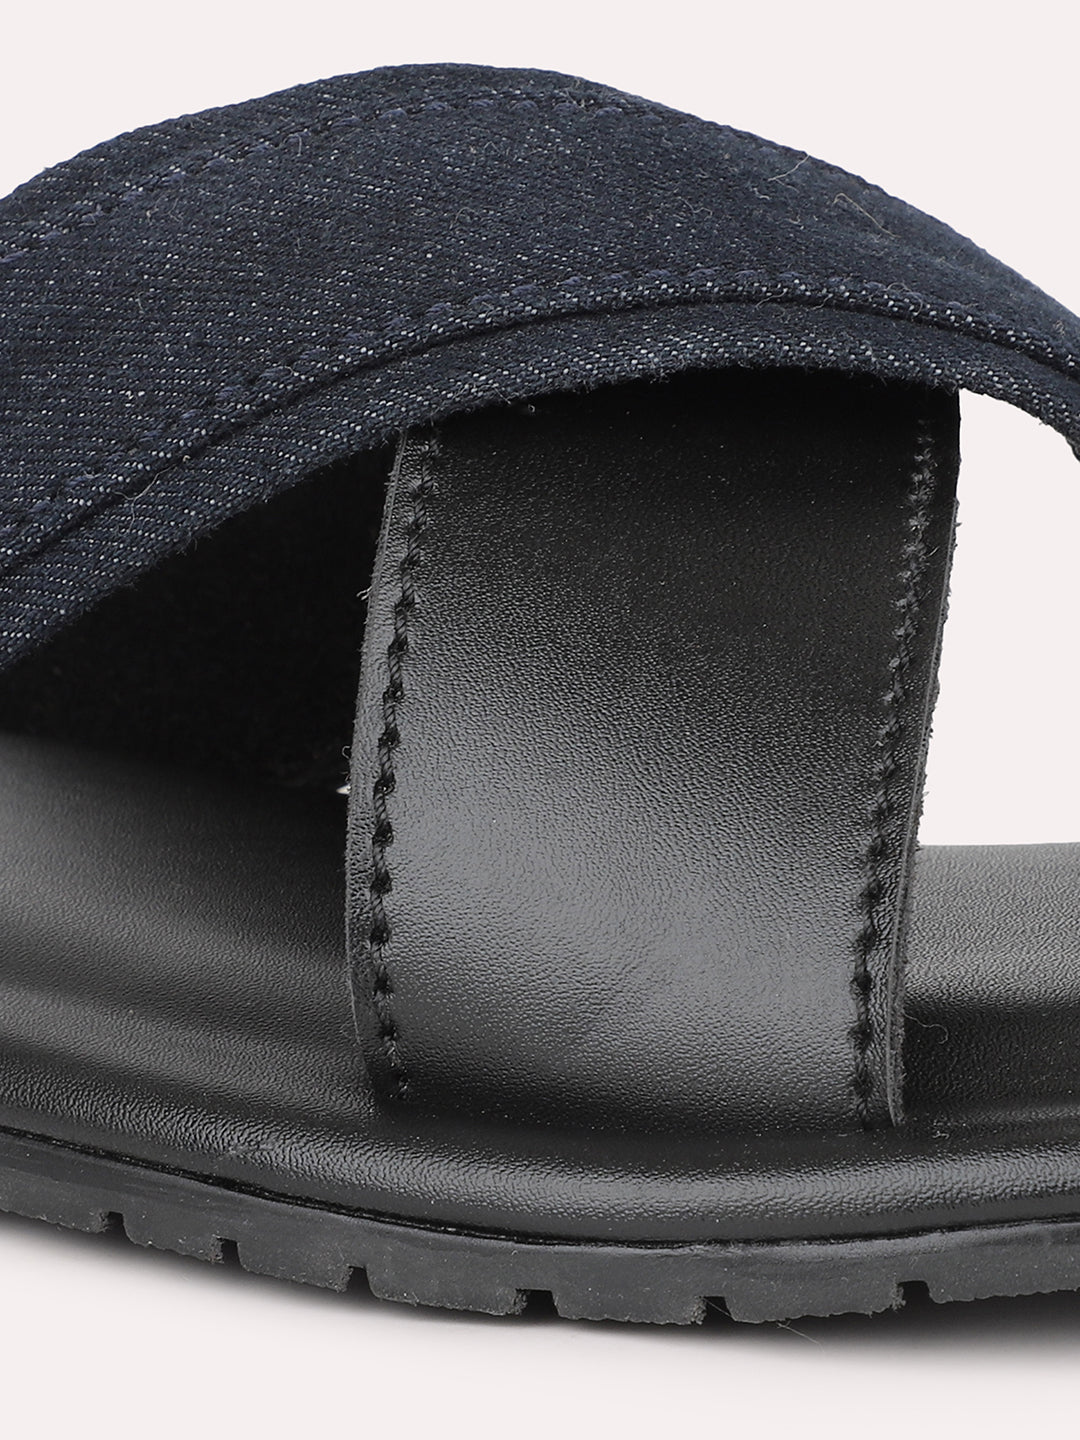 Privo Dark Blue Denim and Black Casual Sandals For Men